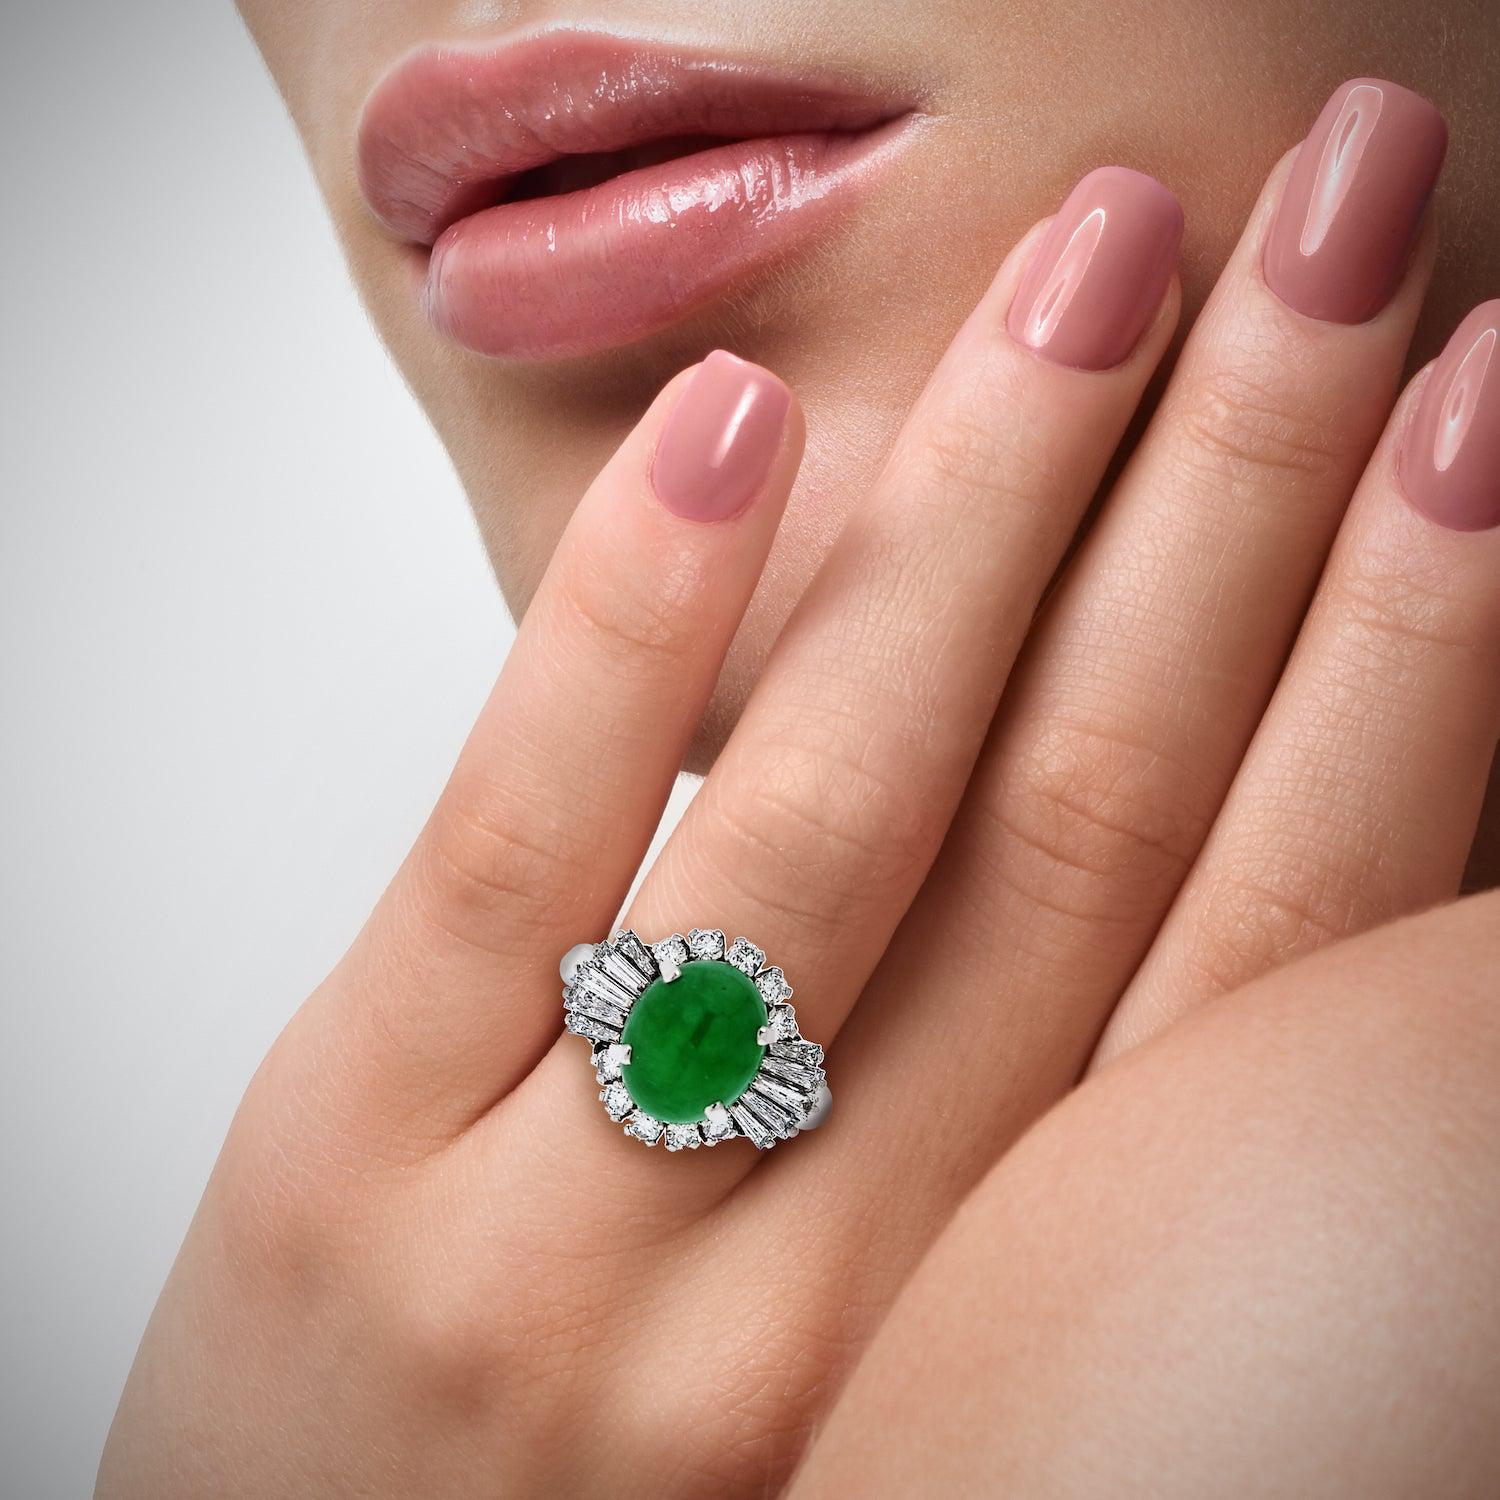 GIA certified 3.50 Carat Cabochon-cut Jade With Baguette Cut Diamonds in Platinum 900 Ring setting - ASSAY